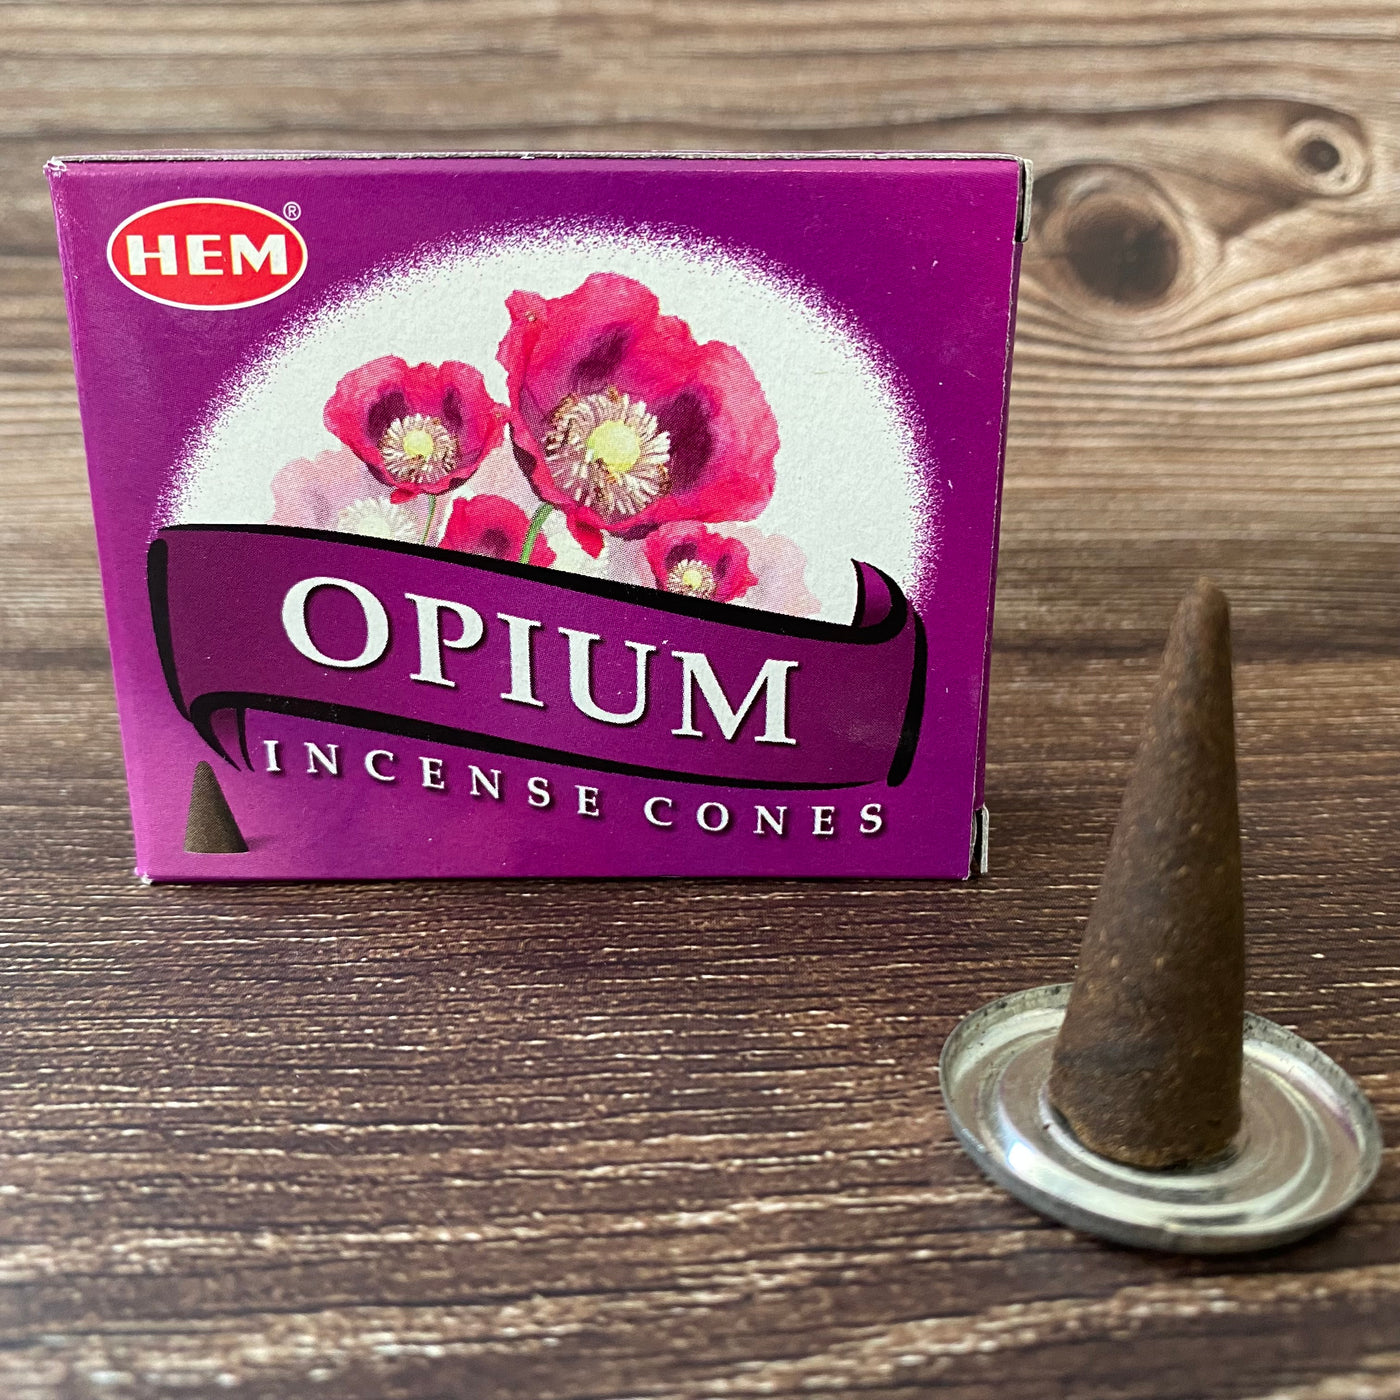 HEM - Opium Cone Incense (10 pack)